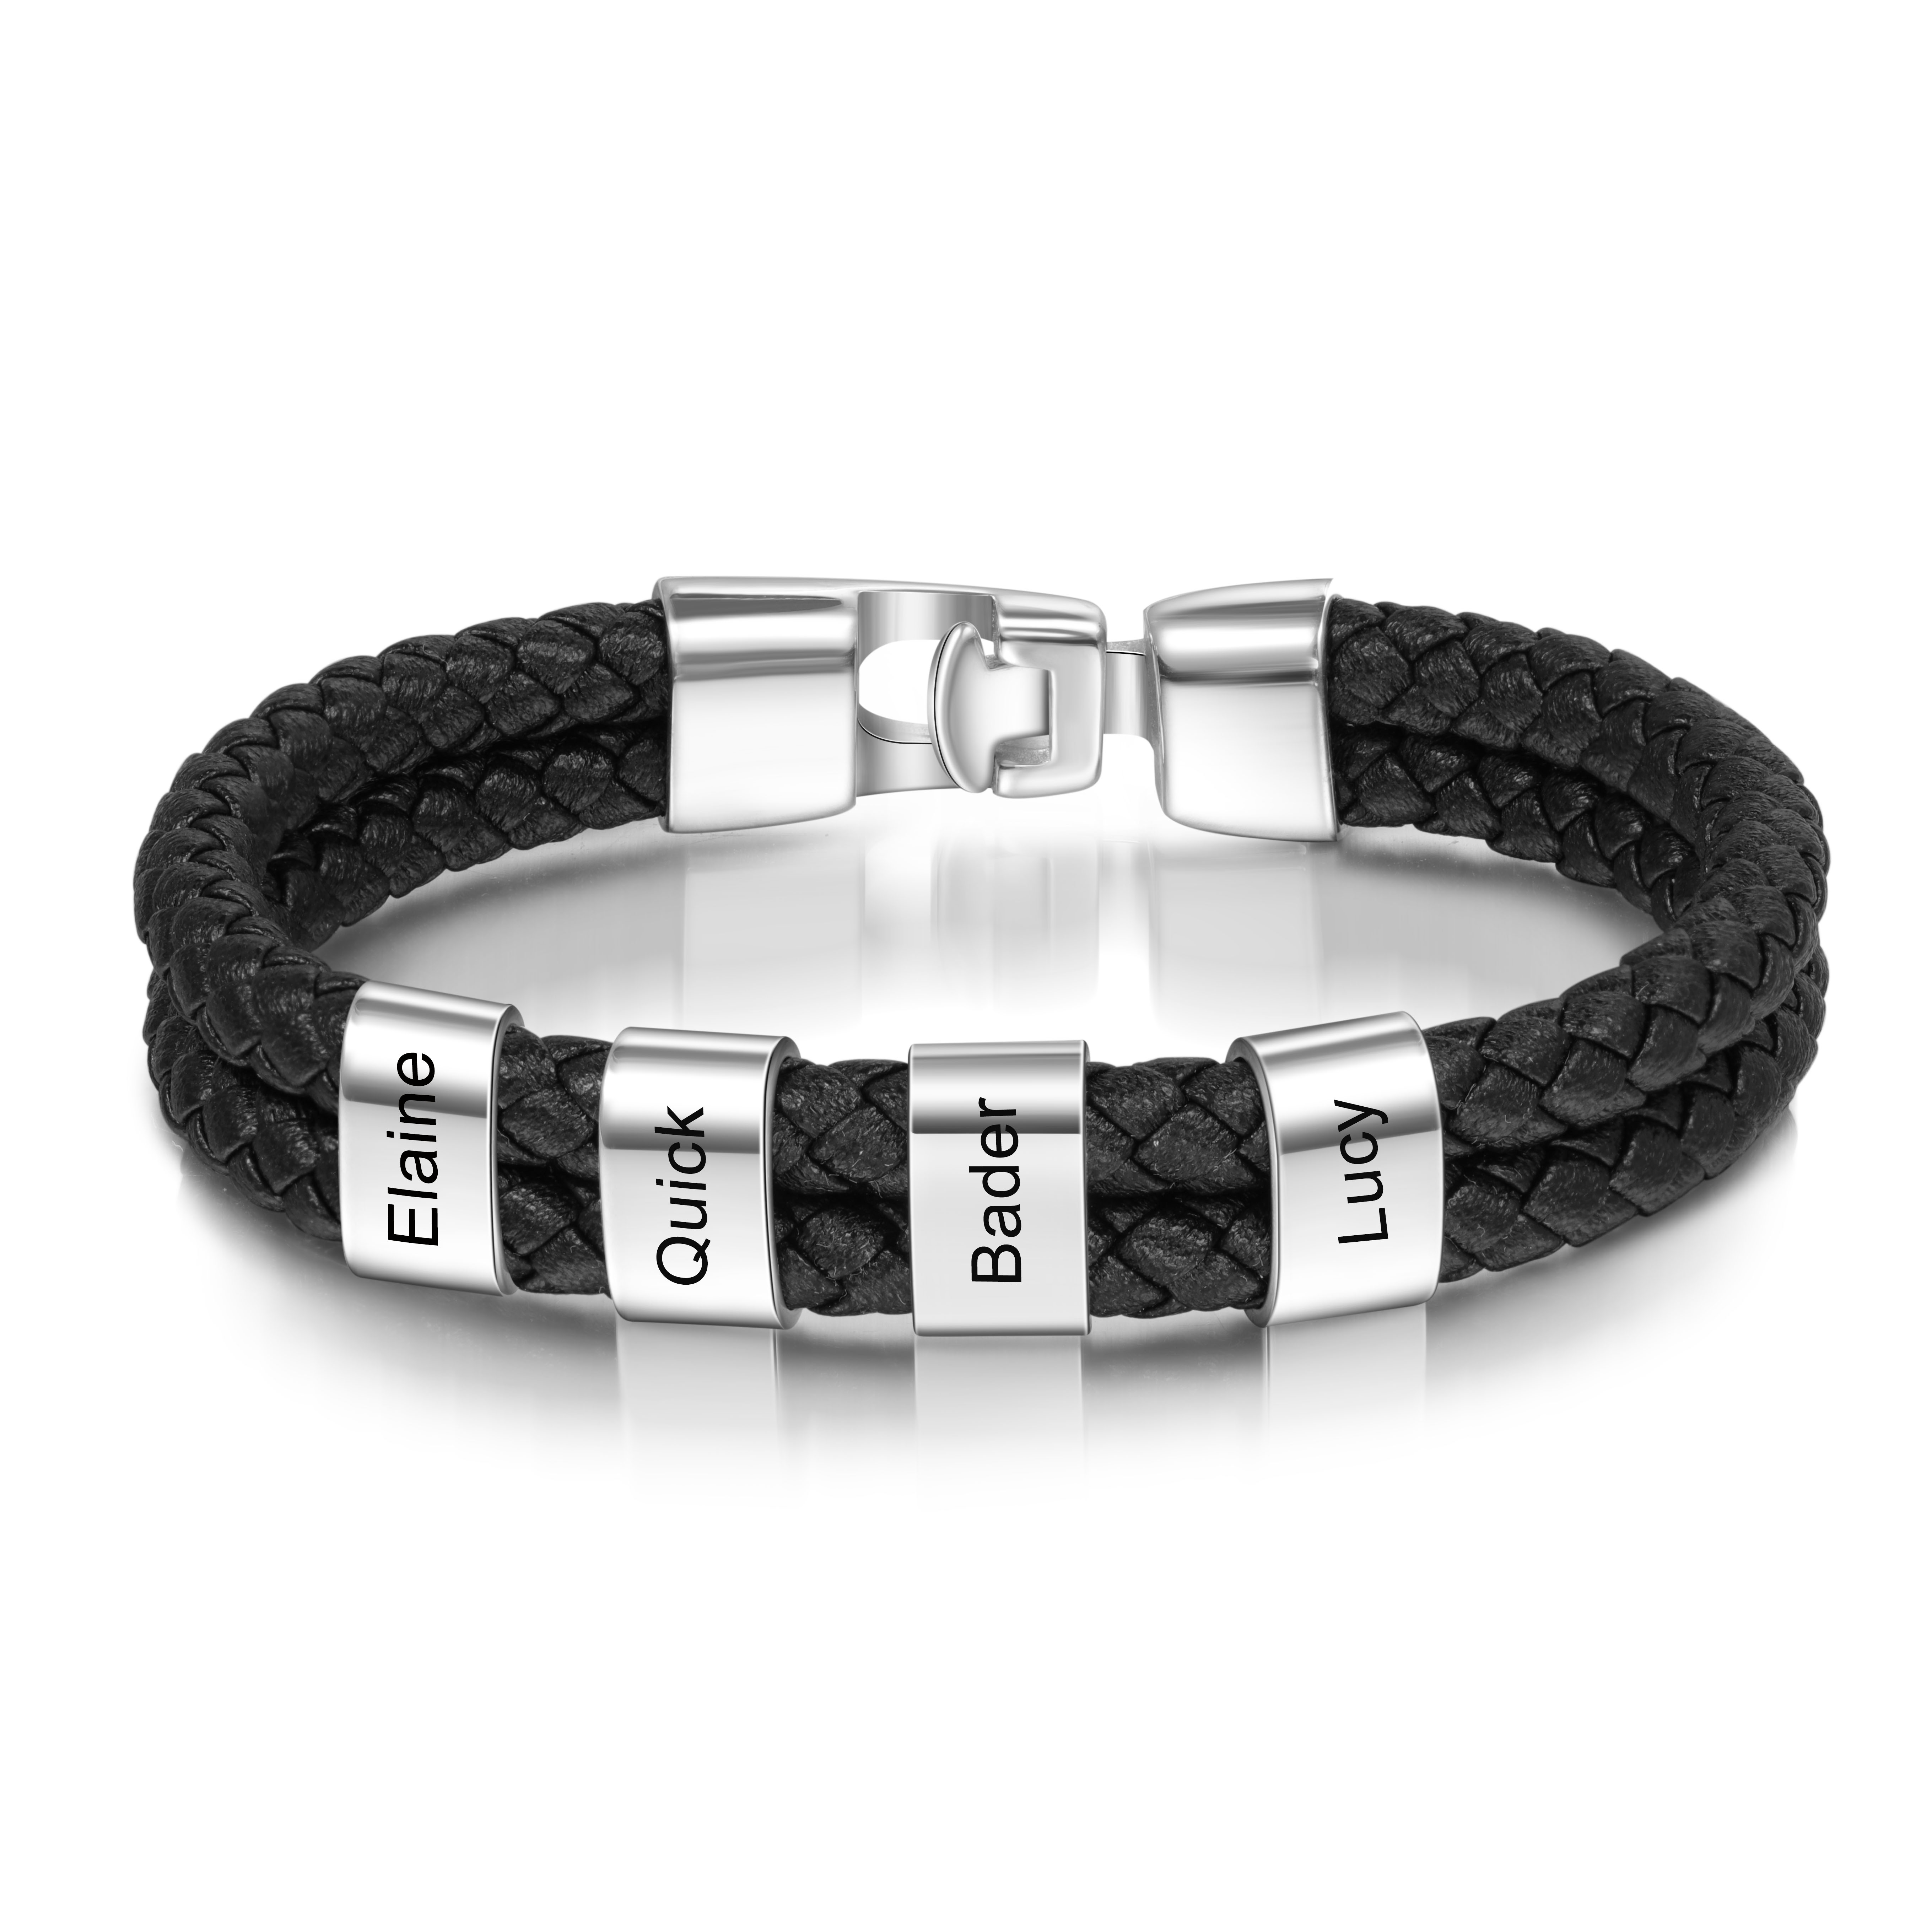 Customized Braided Leather Bracelet Engraved 4 Names Men's Bracelet for Him